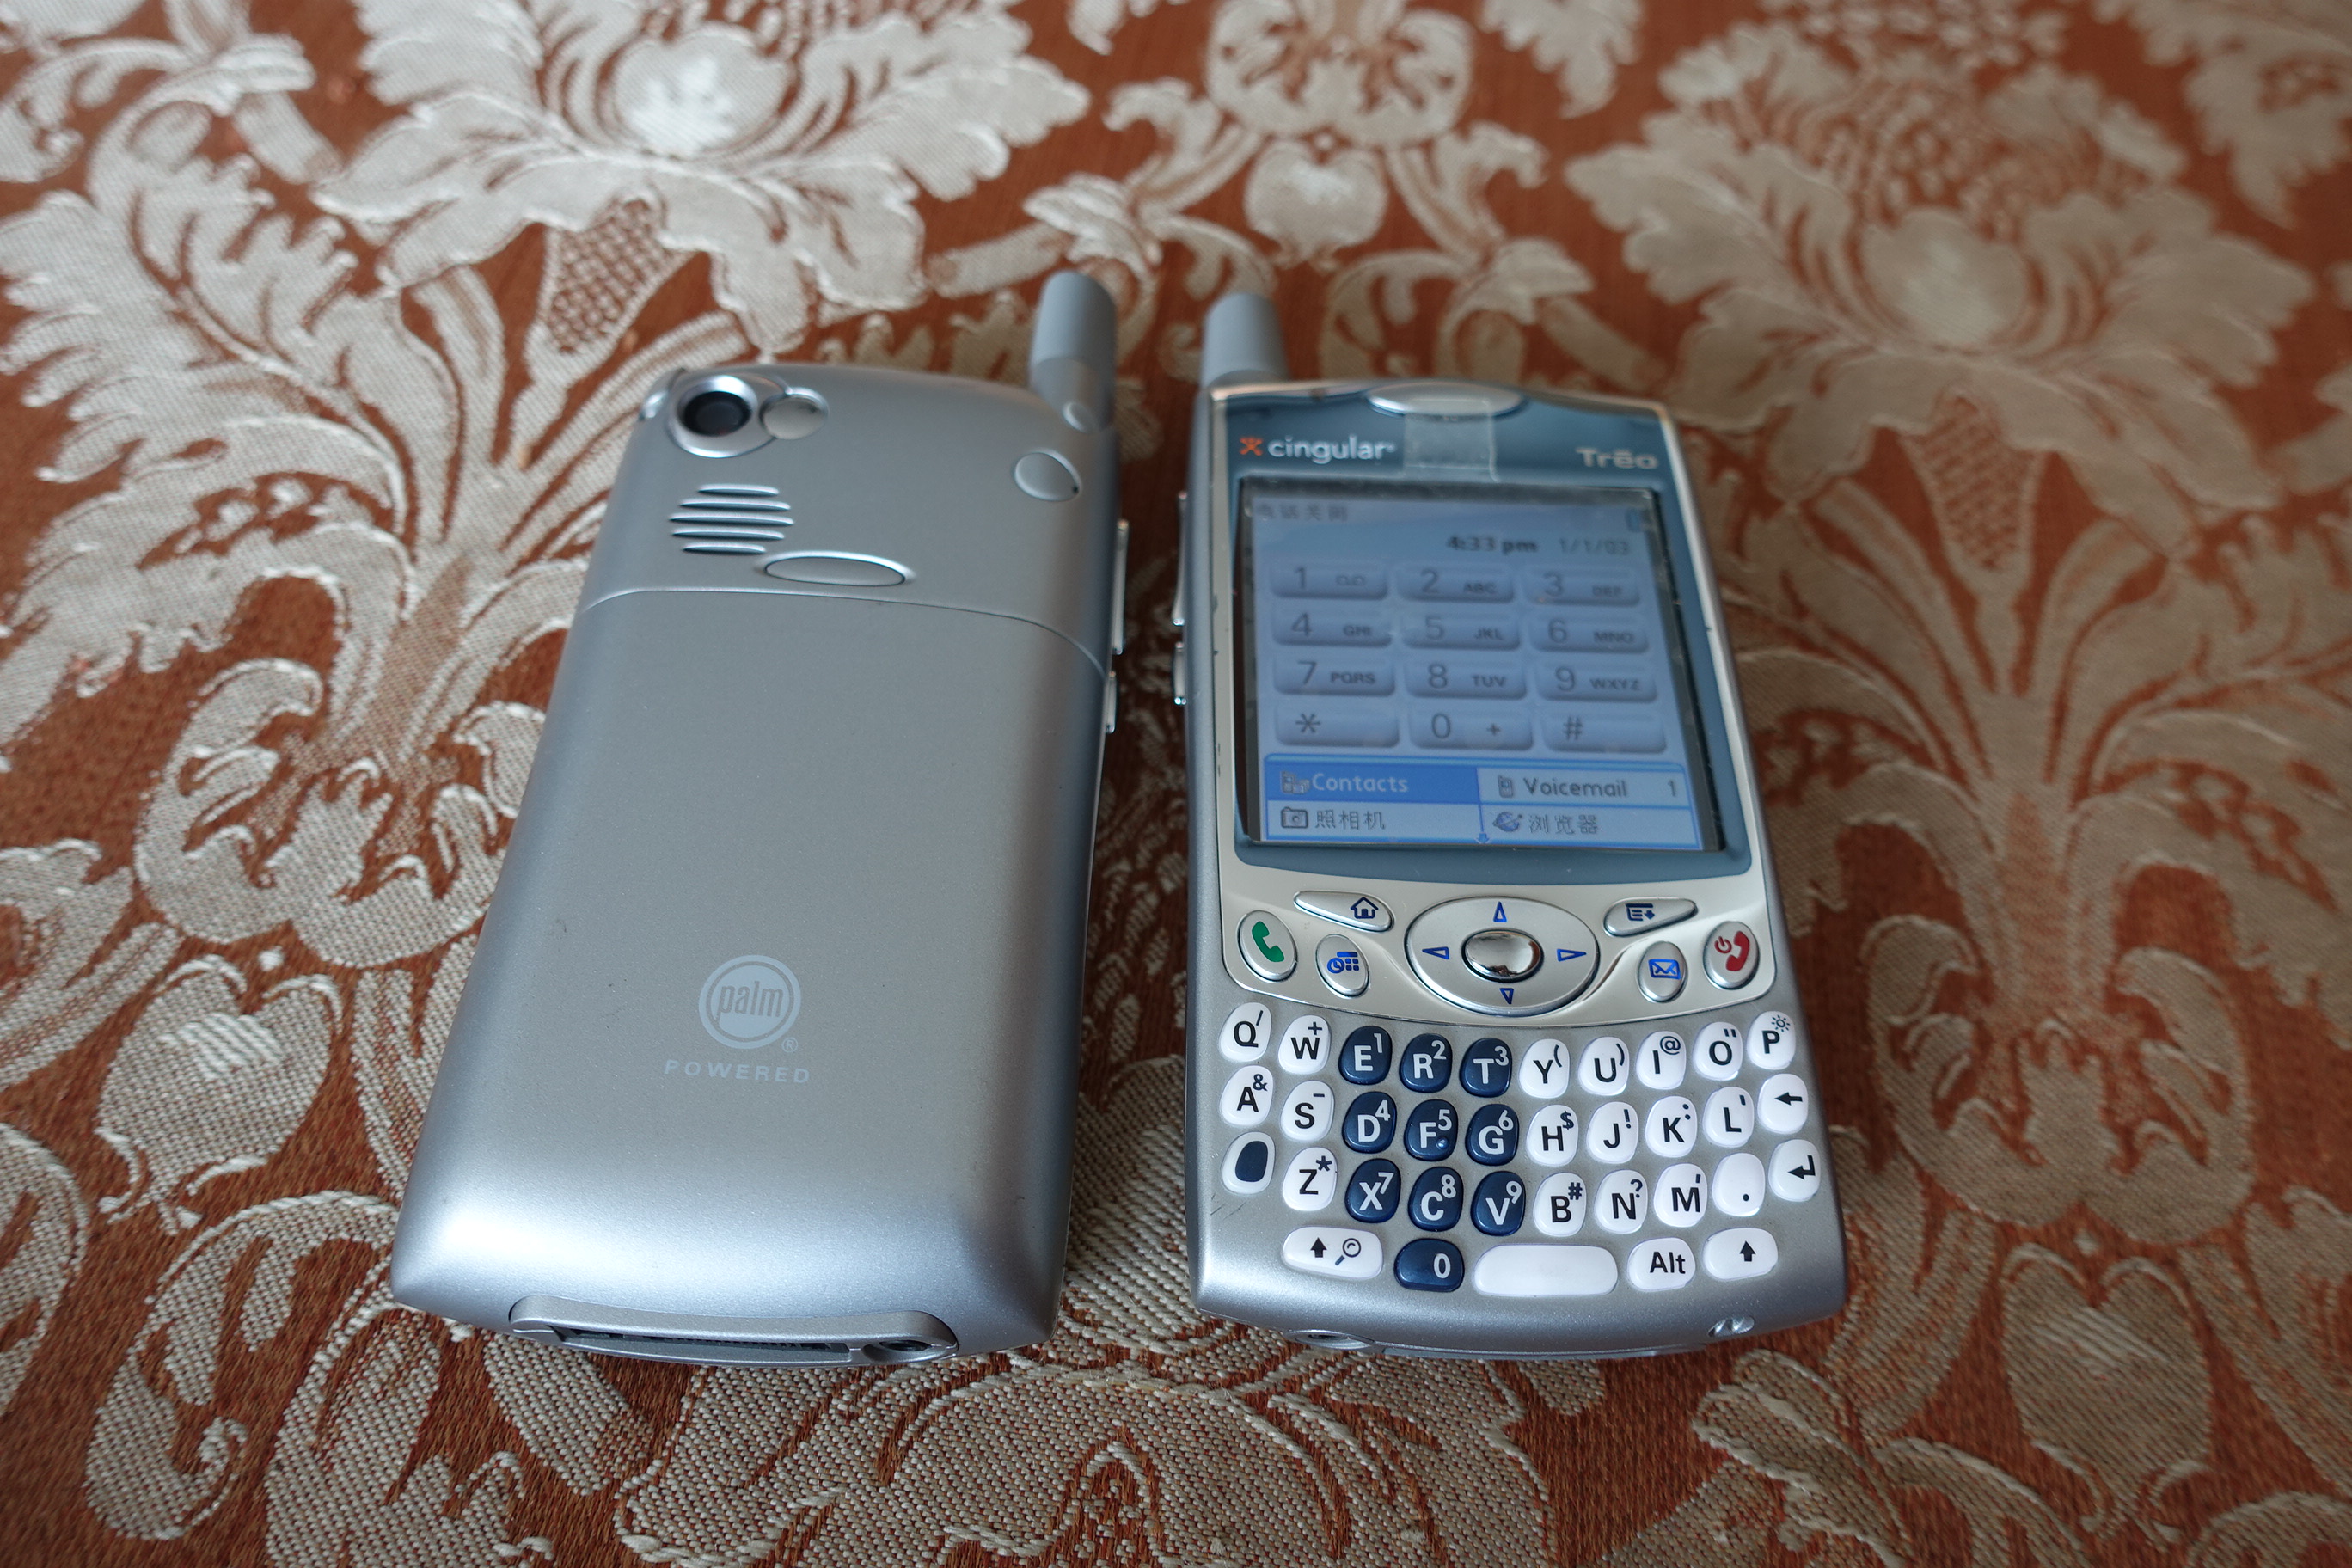 BENWAN PALM TREO 650 GSM CDMA -